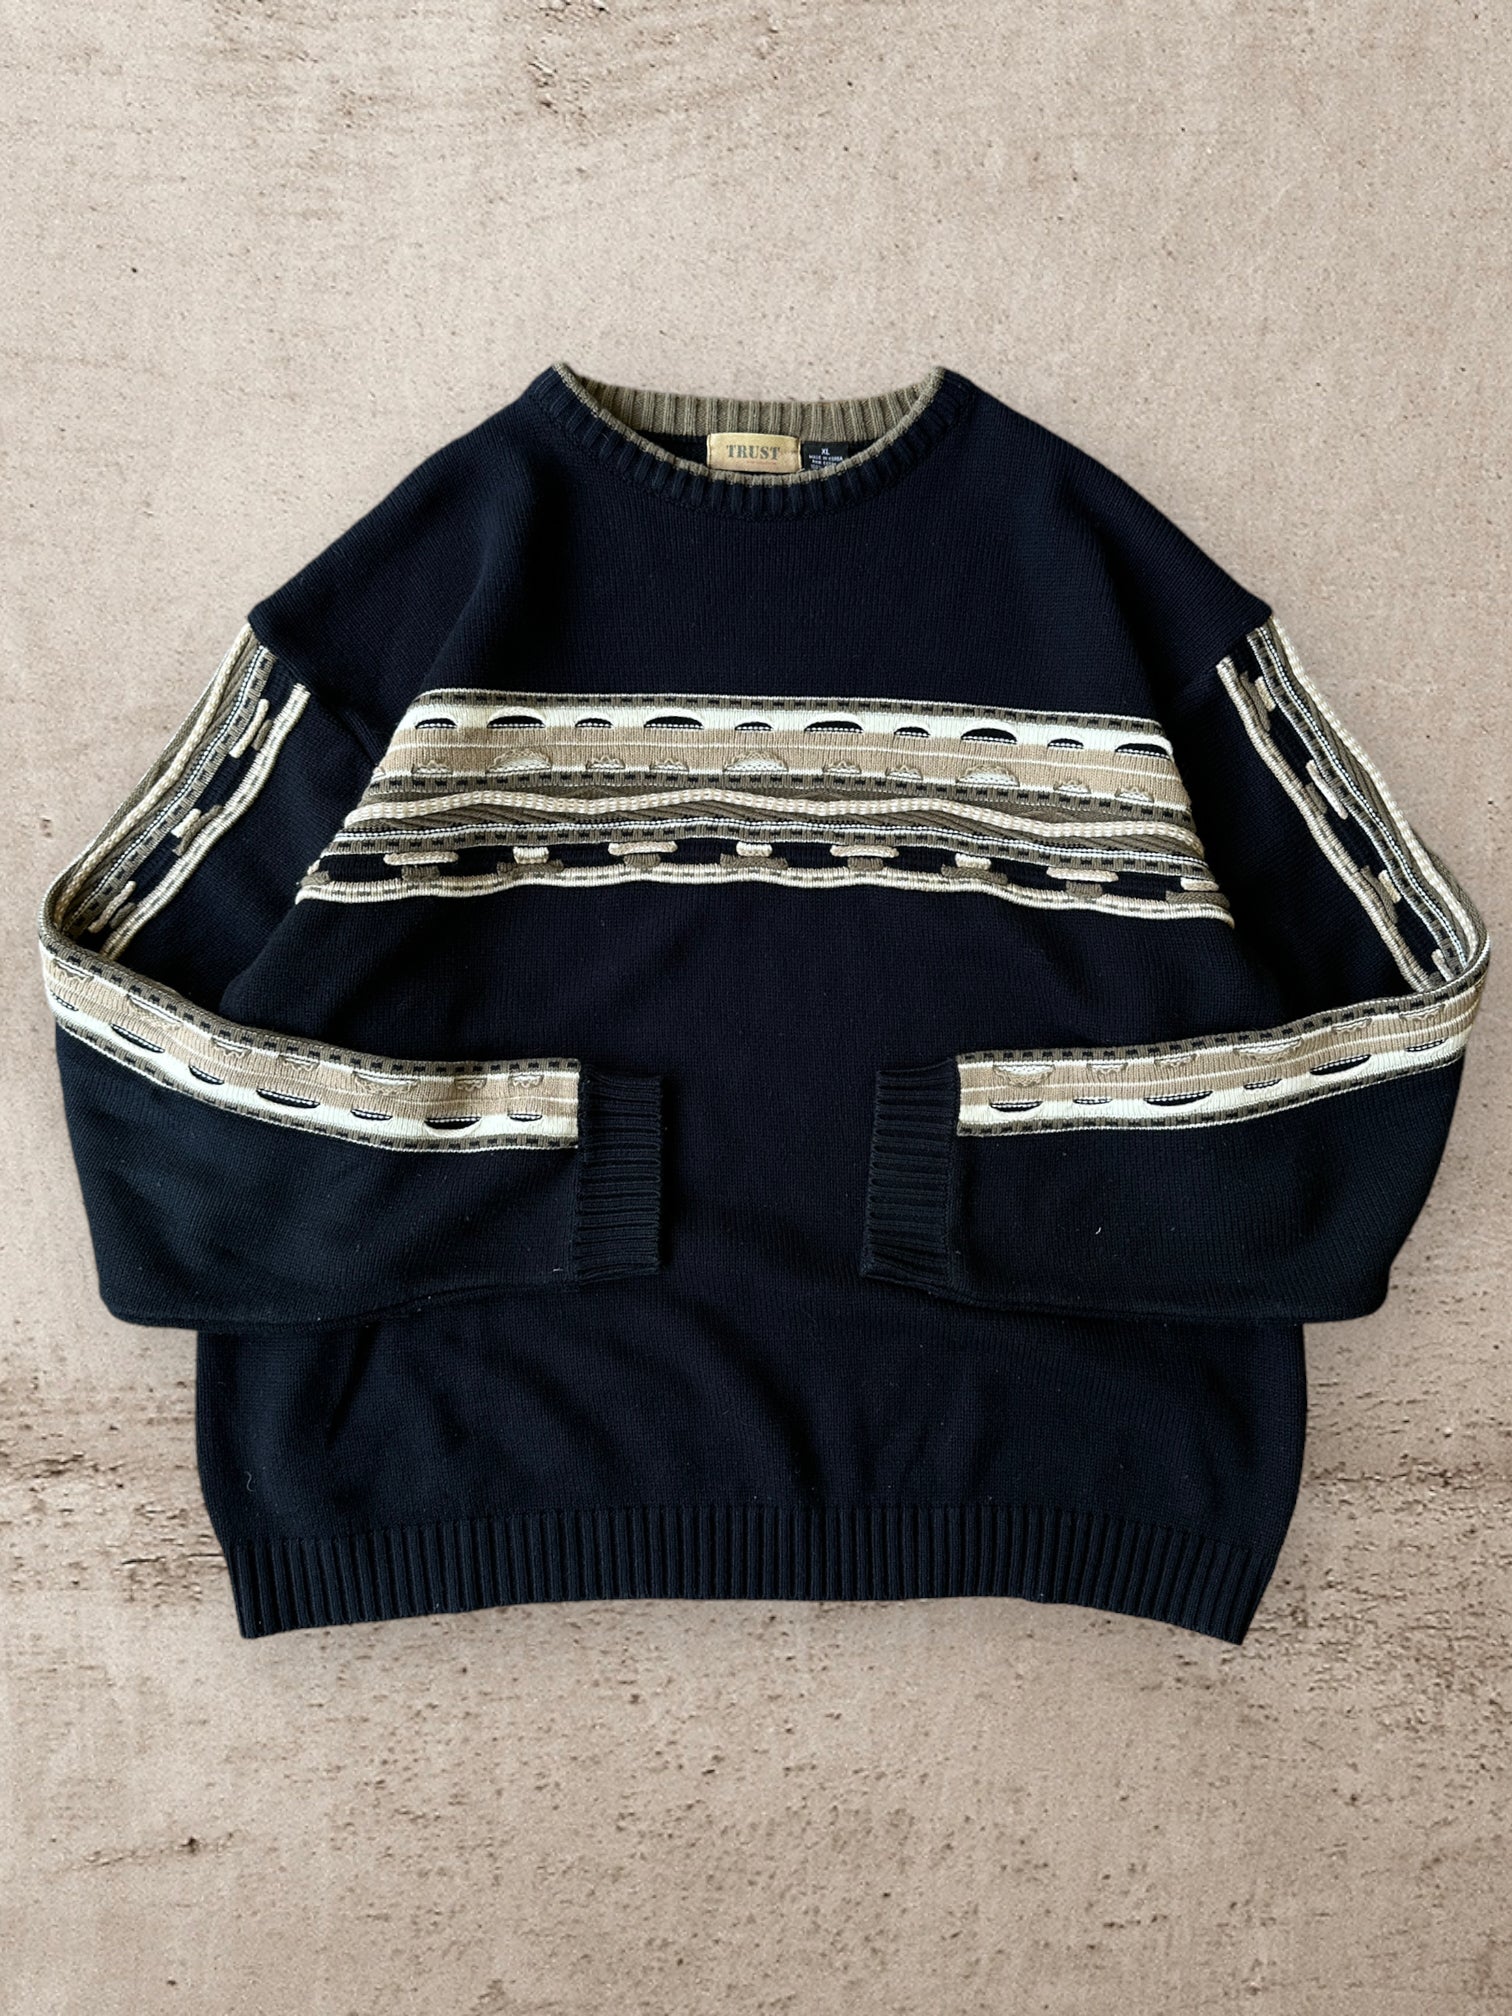 Vintage 3D Knit Sweater - XL